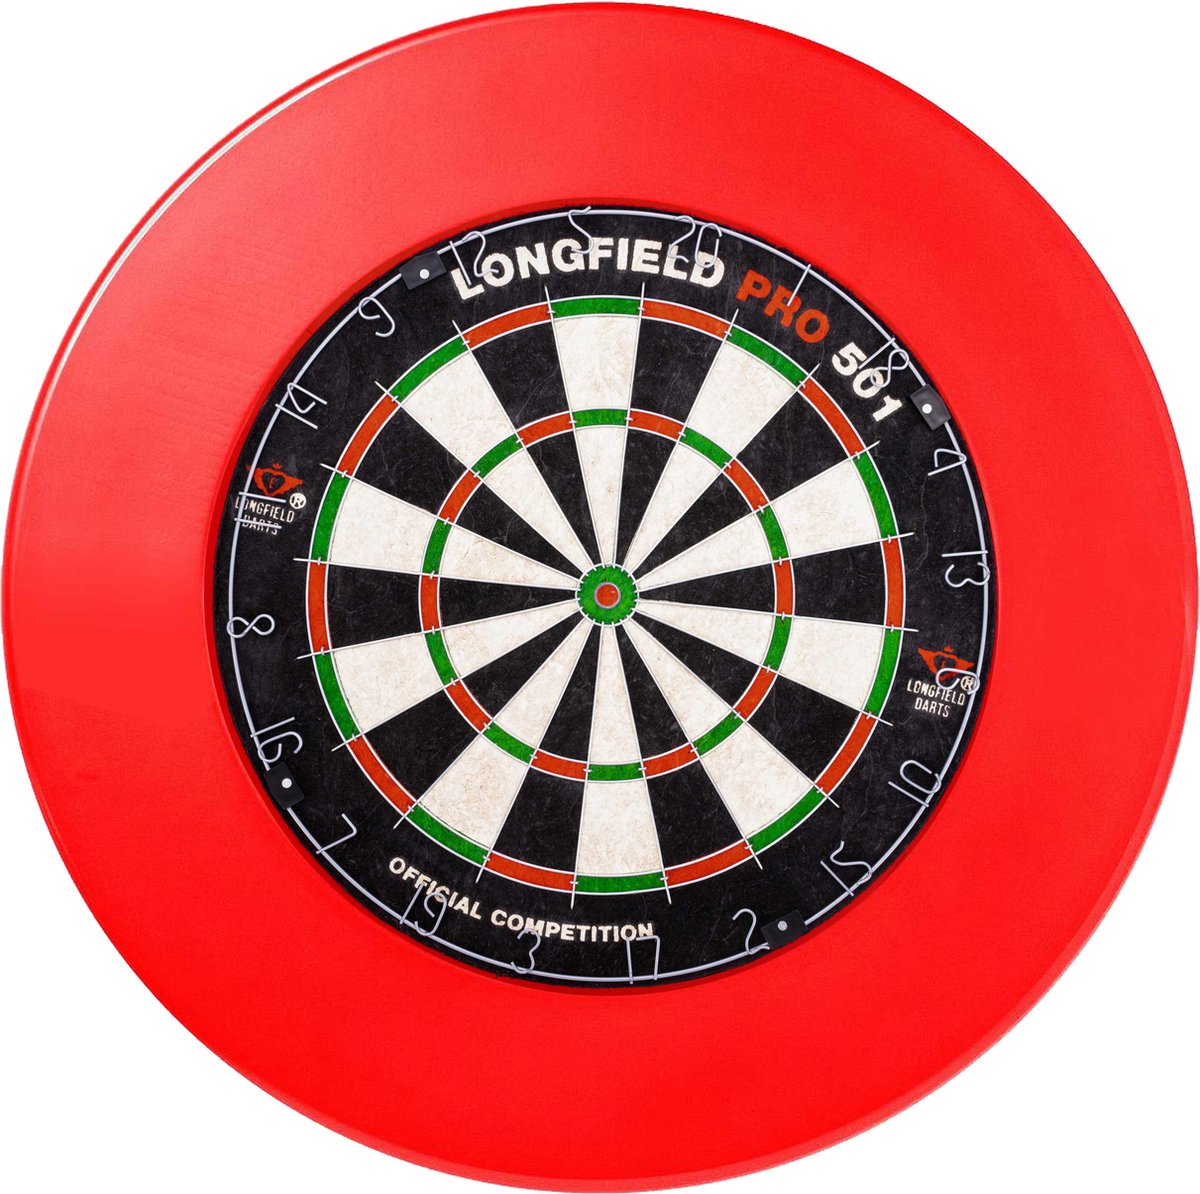 Dartboard Pro501 inclusief PU surround rood met 2 sets darts.